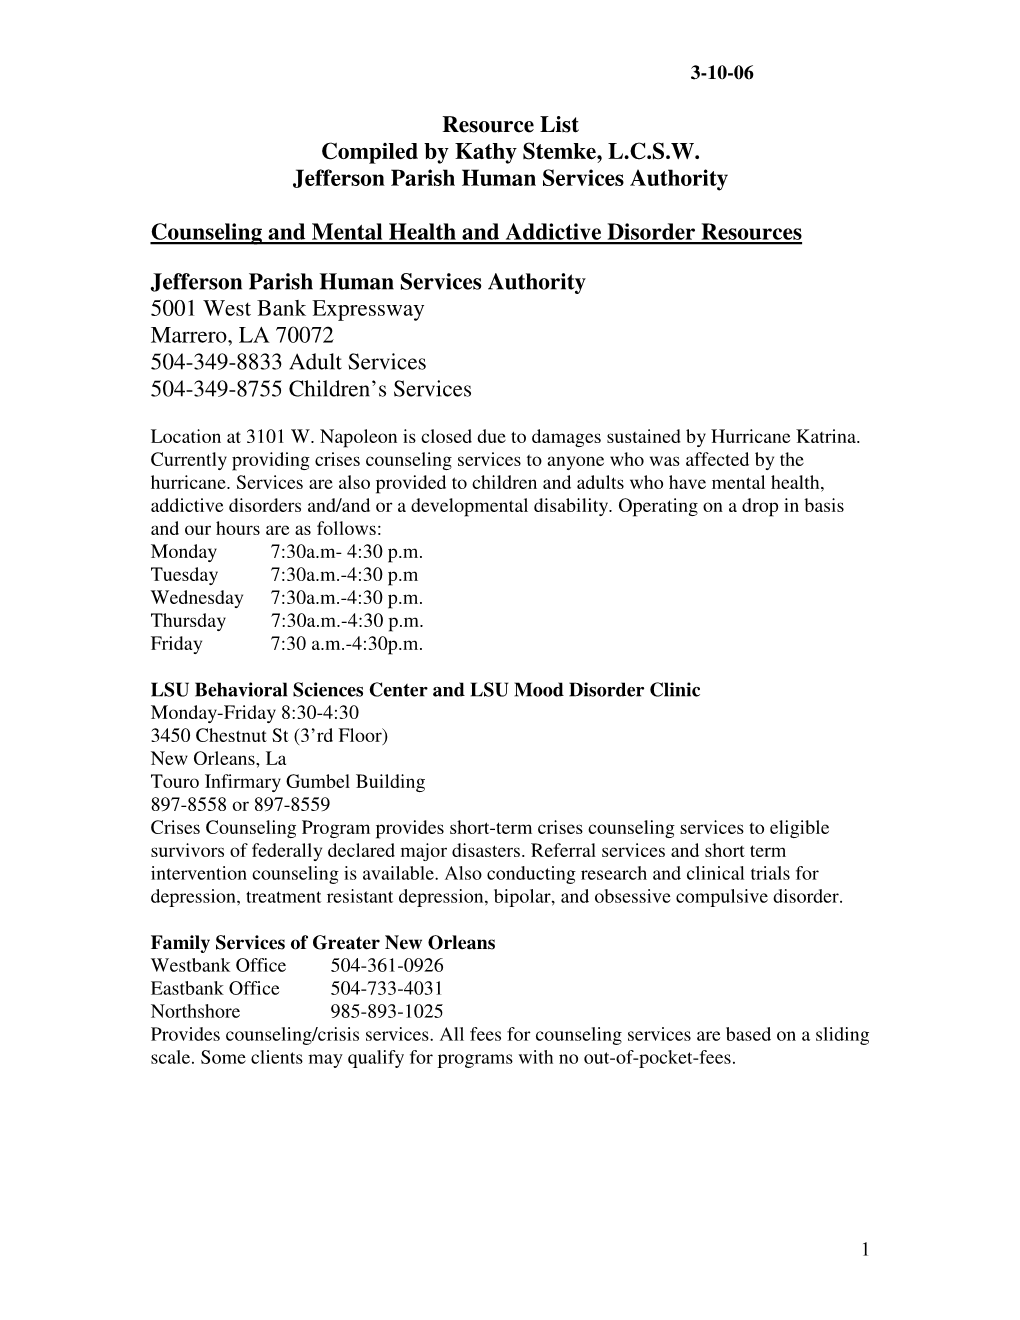 Resource List Compiled by Kathy Stemke, L.C.S.W. Jefferson Parish Human Services Authority